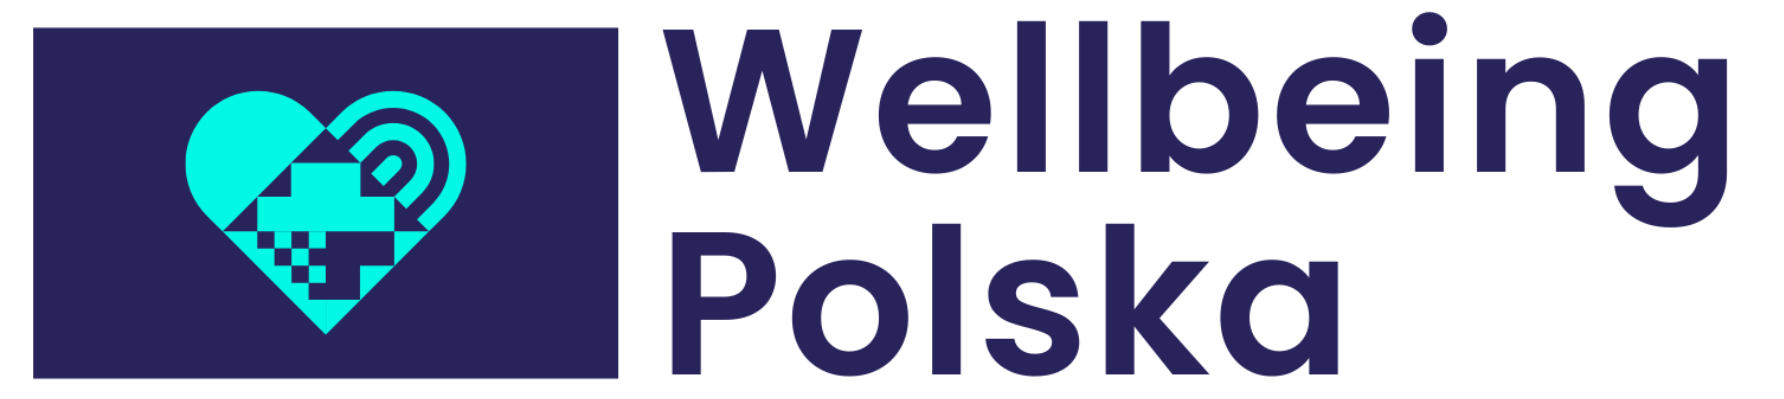 Wellbeing Polska